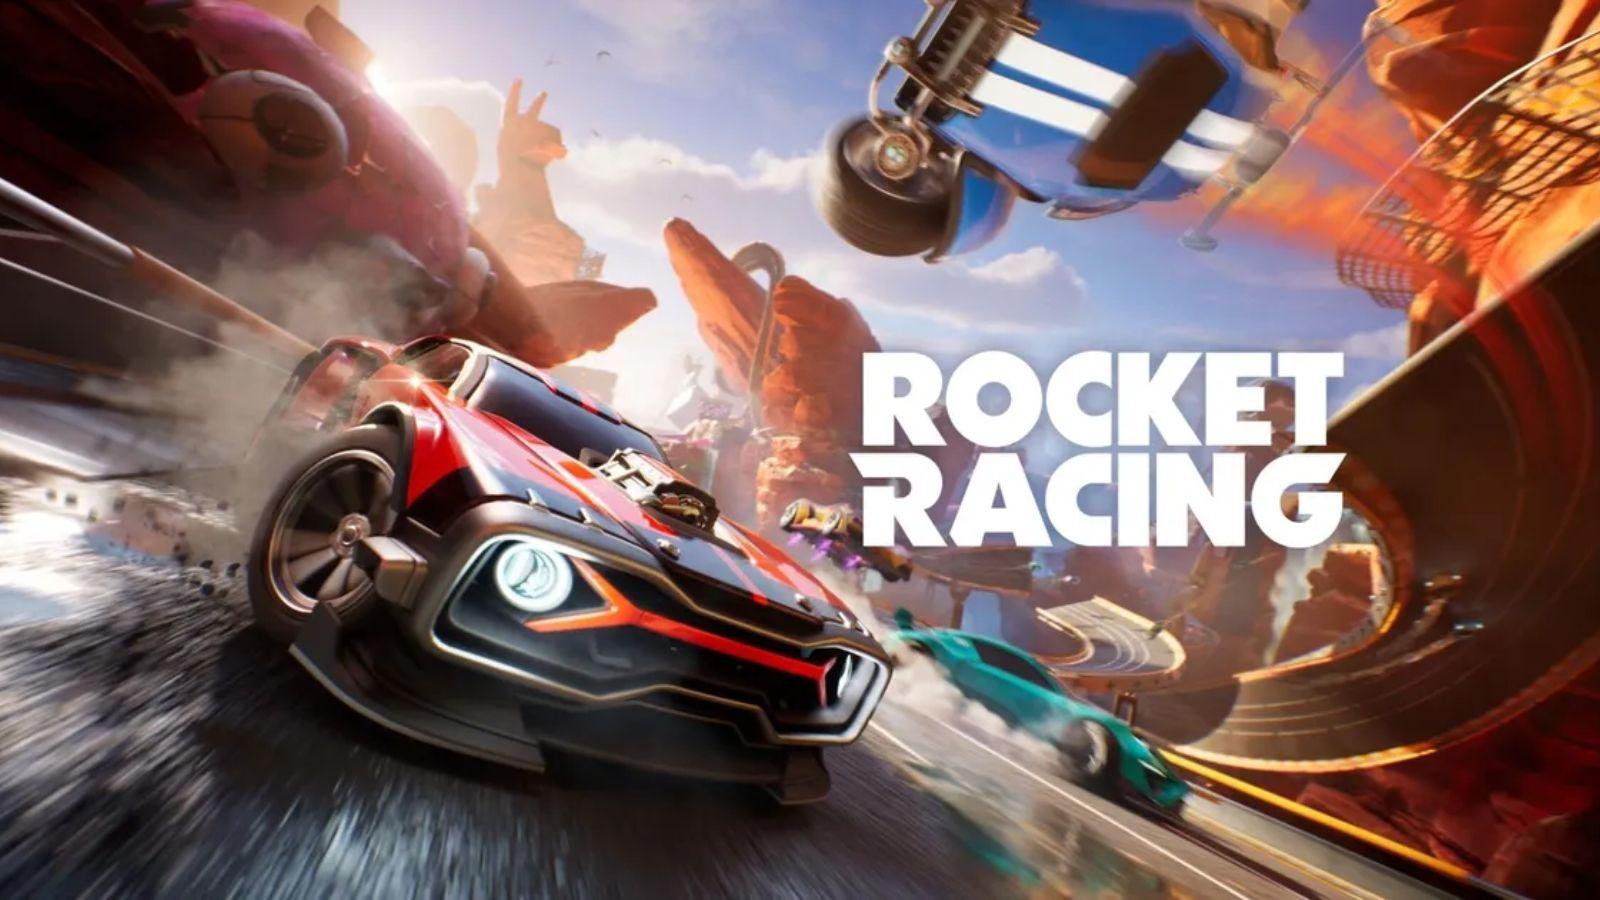 Is Rocket Racing free to play in Fortnite? - Dexerto